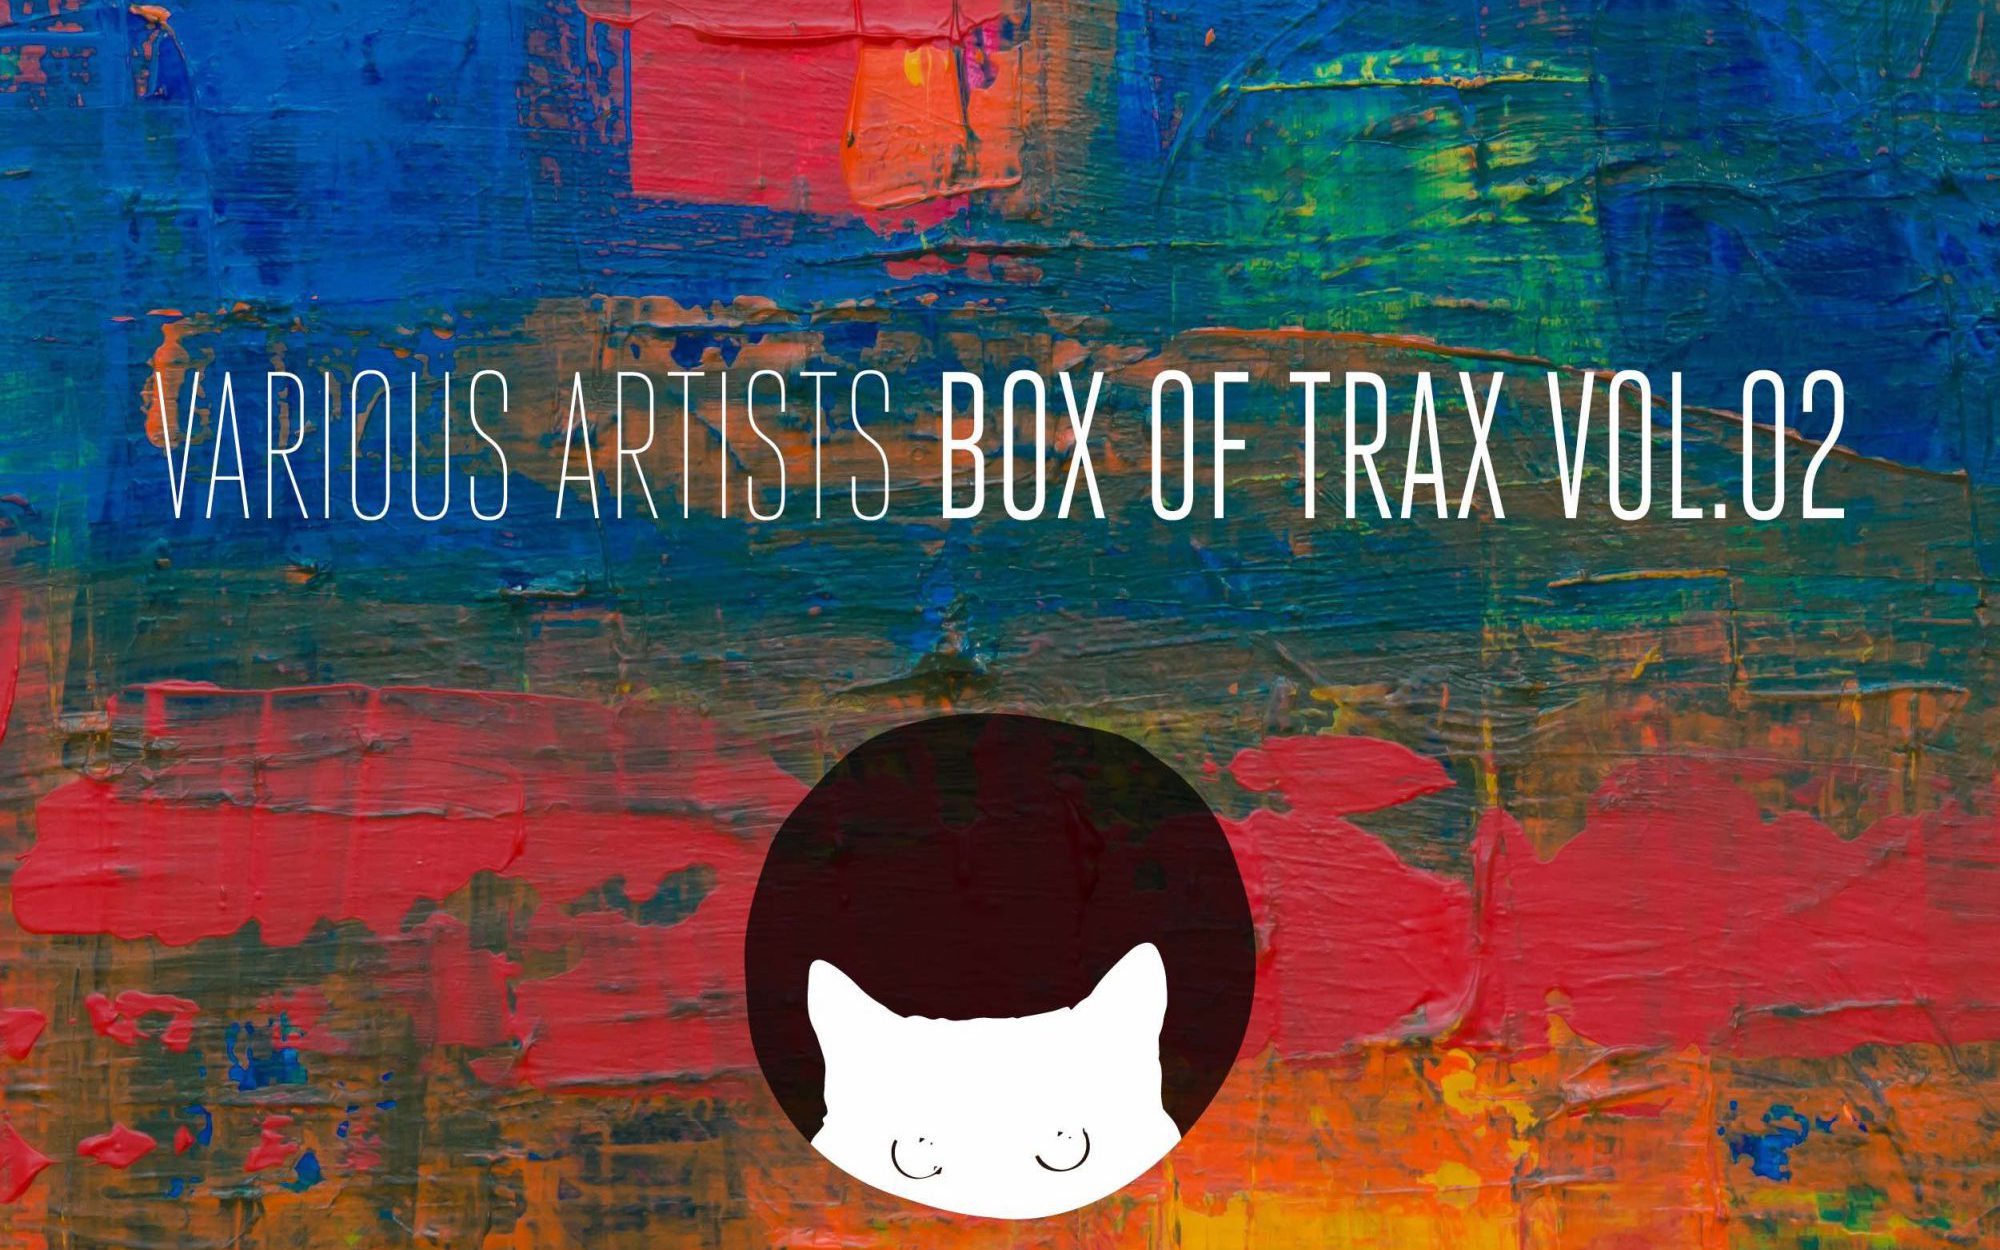 Box Of Cats - Box Of Trax, Vol. 2